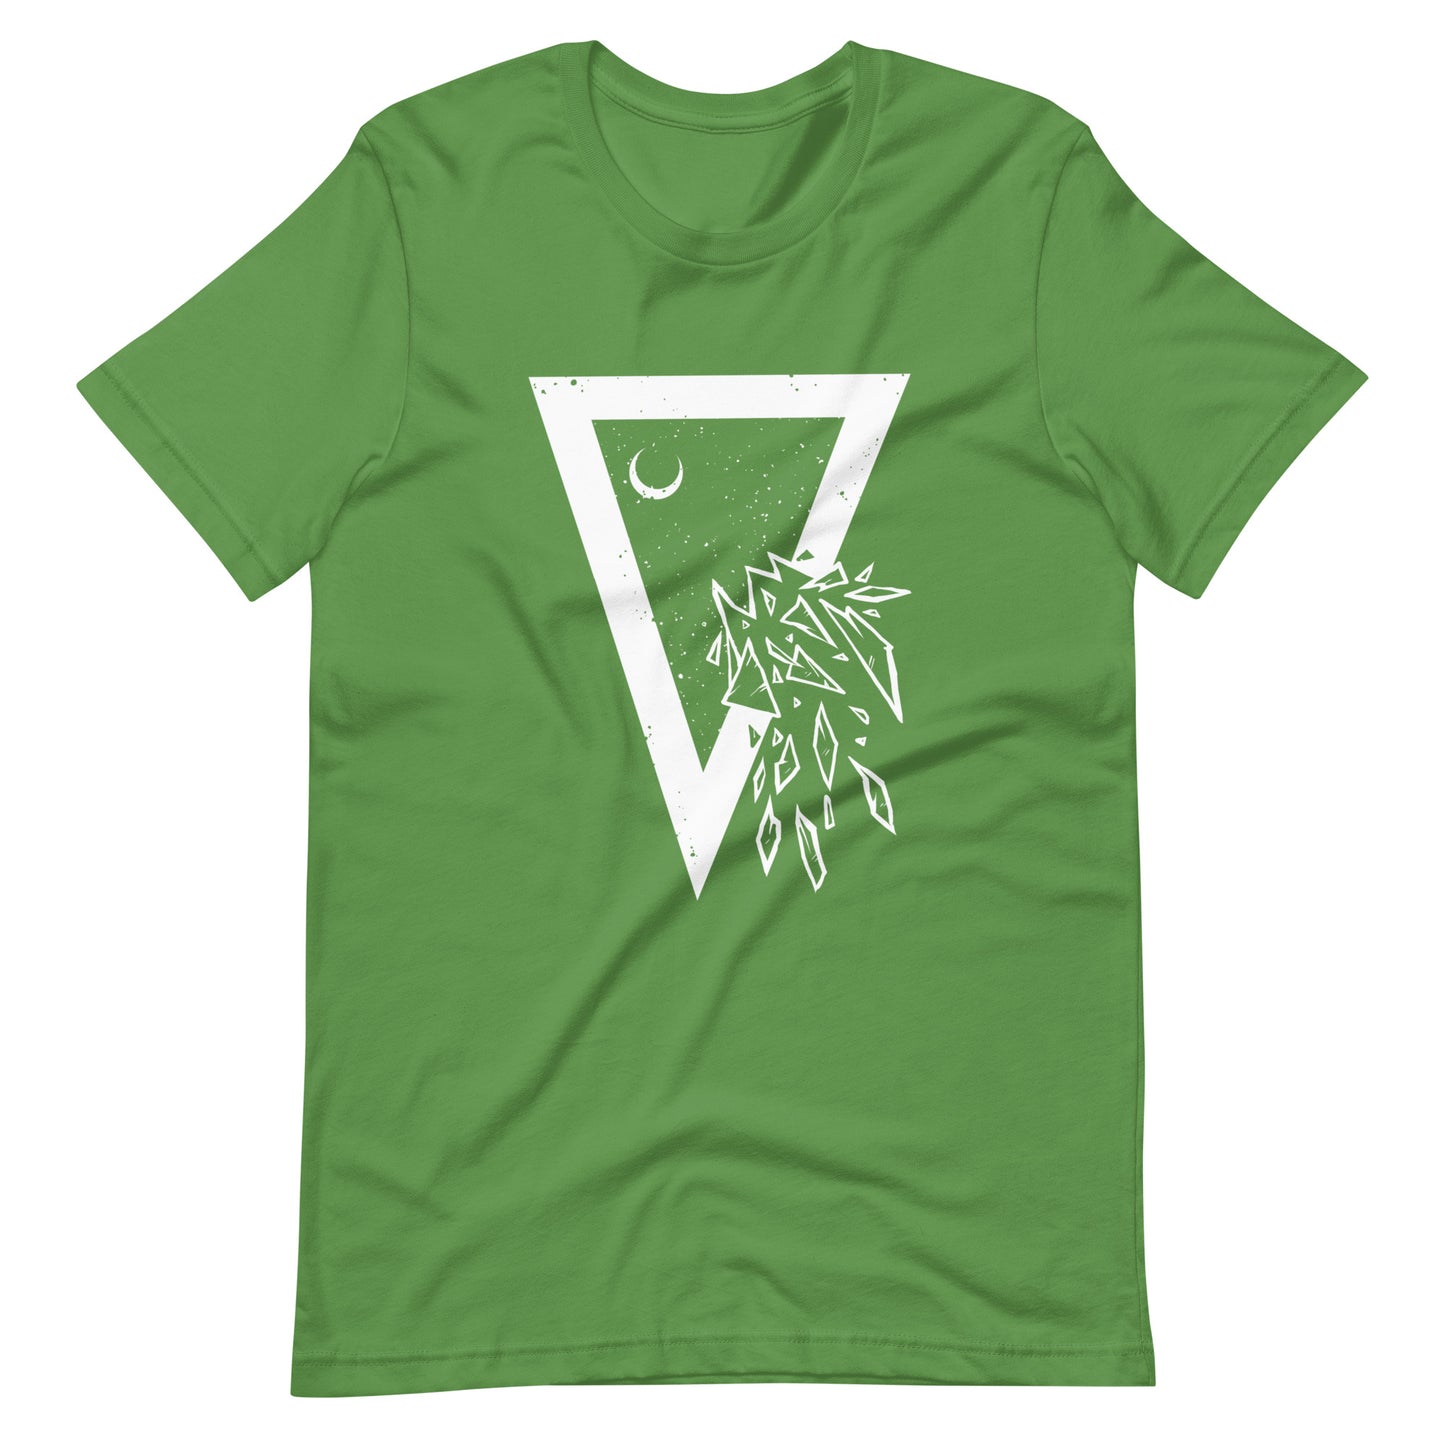 Glass Ceiling - Men's t-shirt - Leaf Front